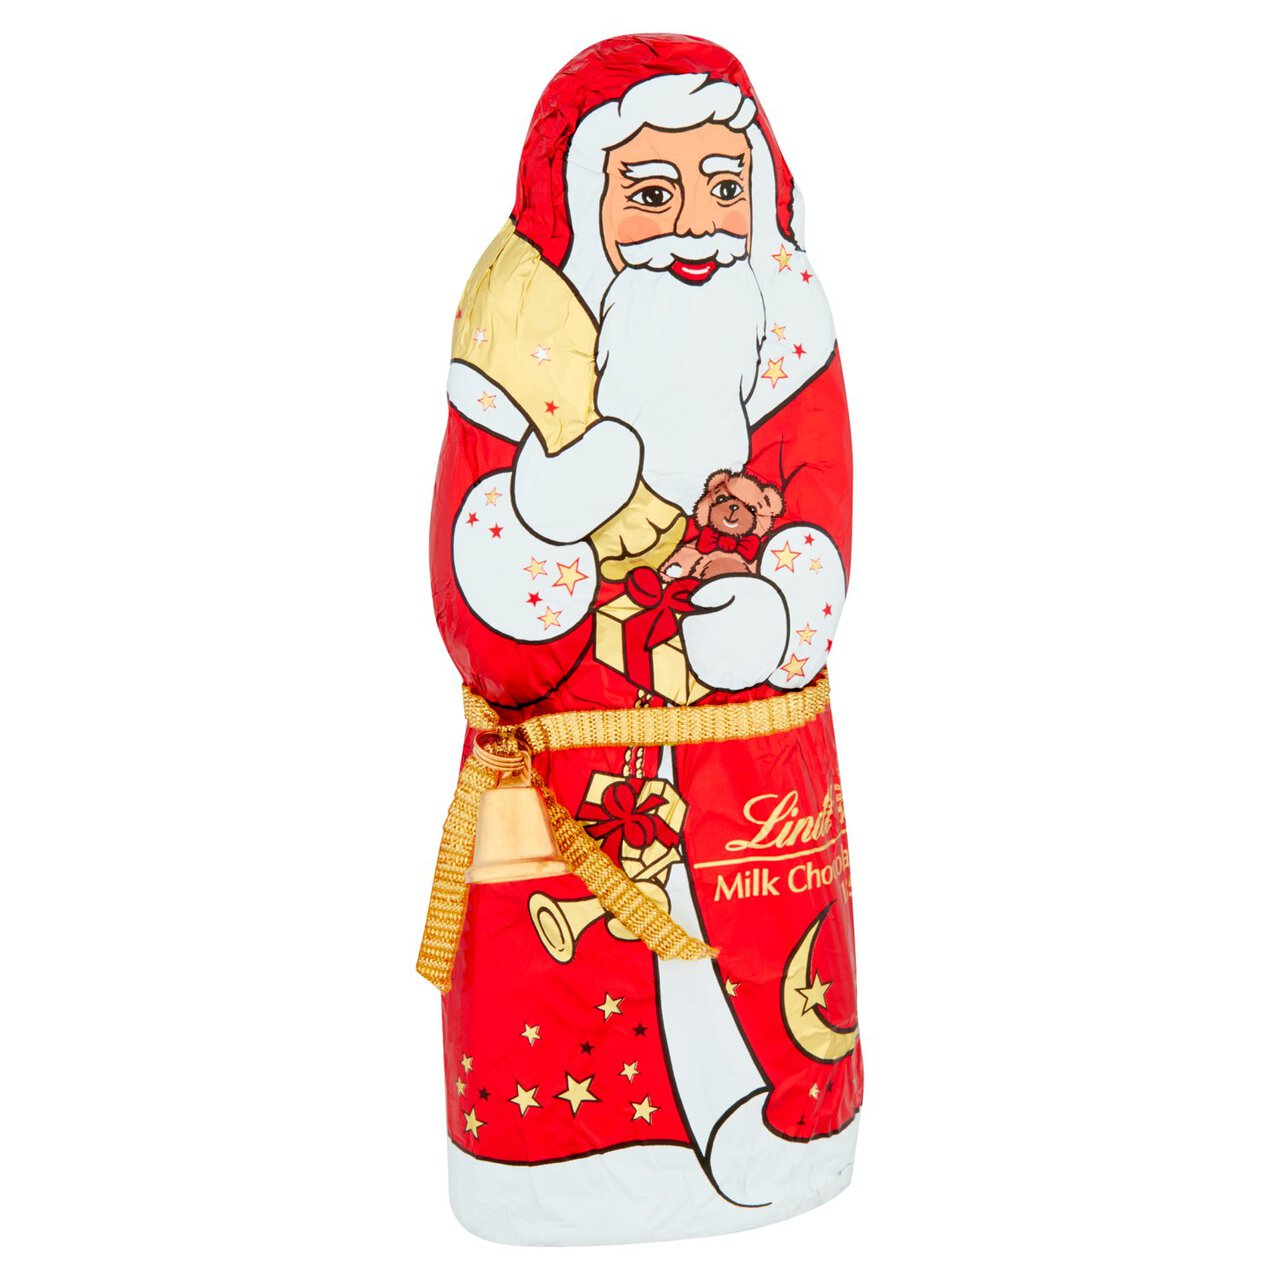 Lindt Milk Chocolate Santa 125g